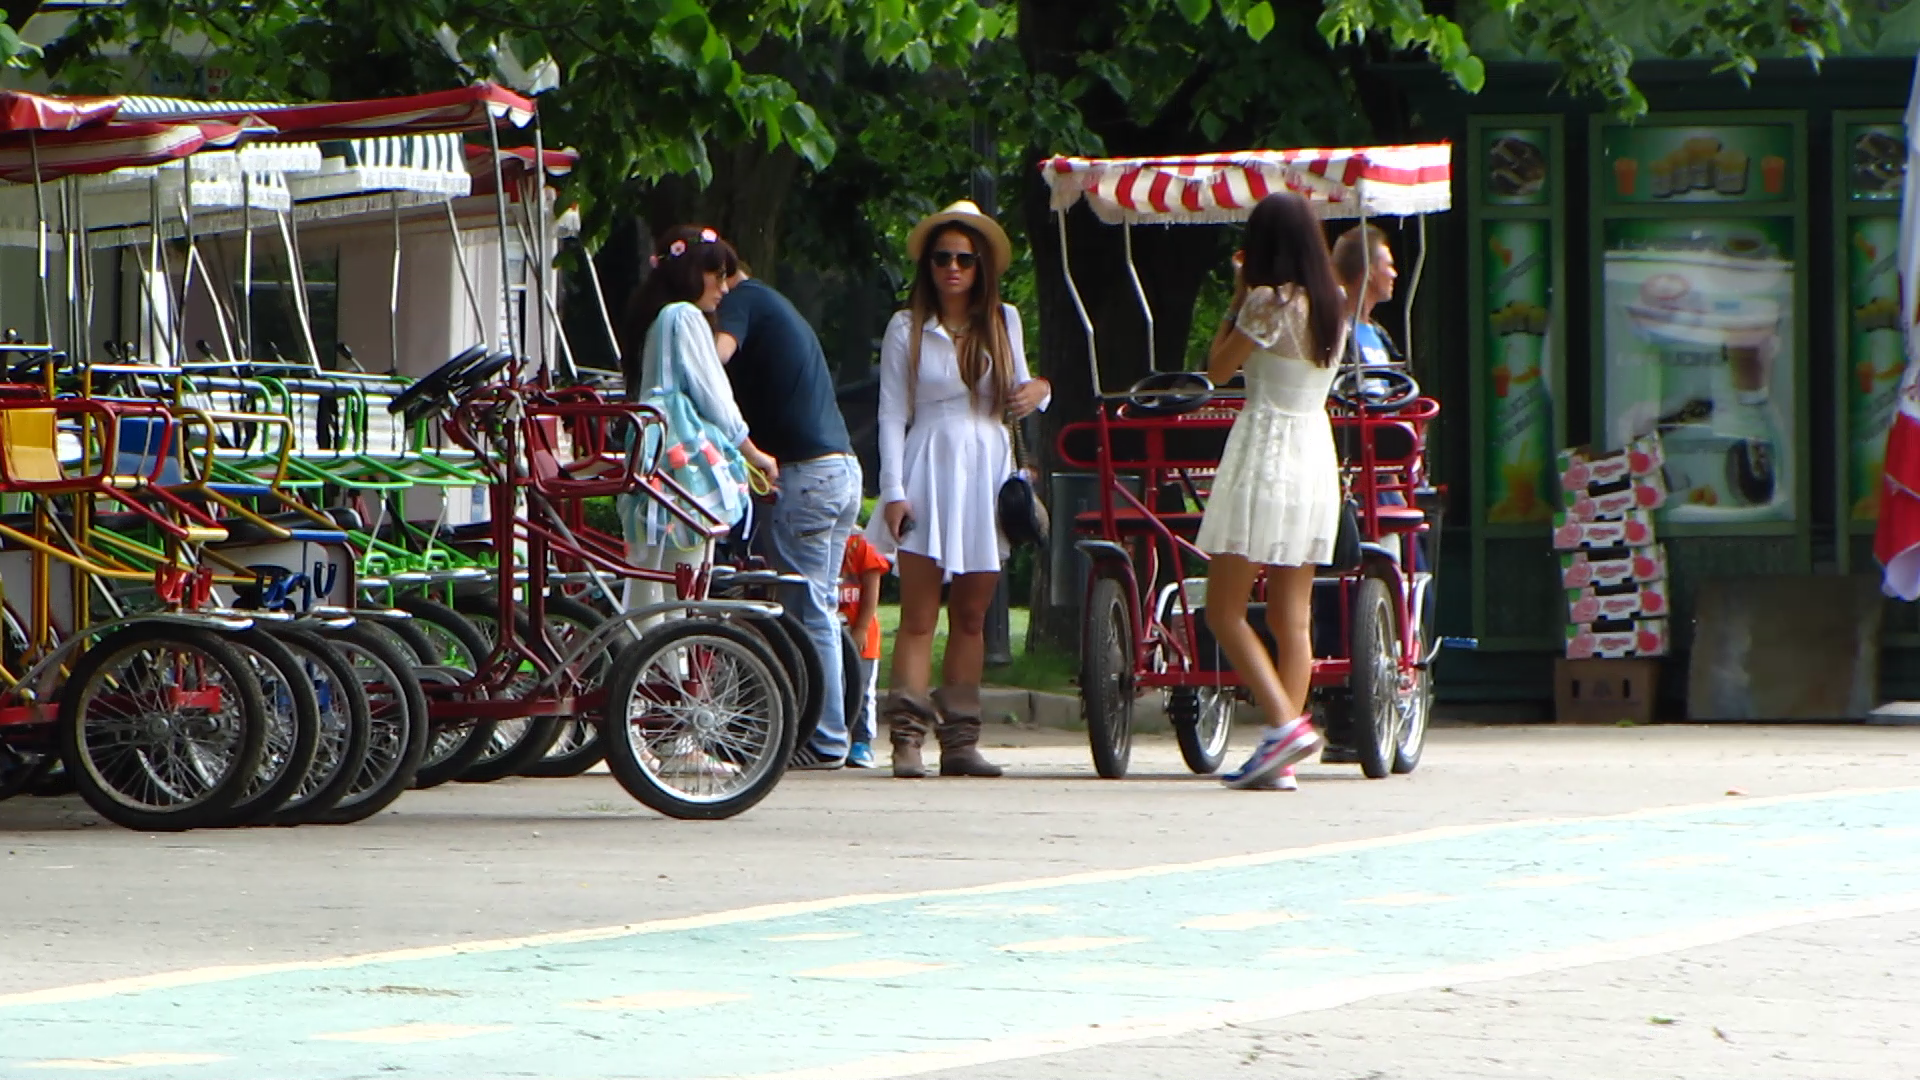 Fetele au vrut cu tot dinadinsul sa se plimbe cu o bicicleta